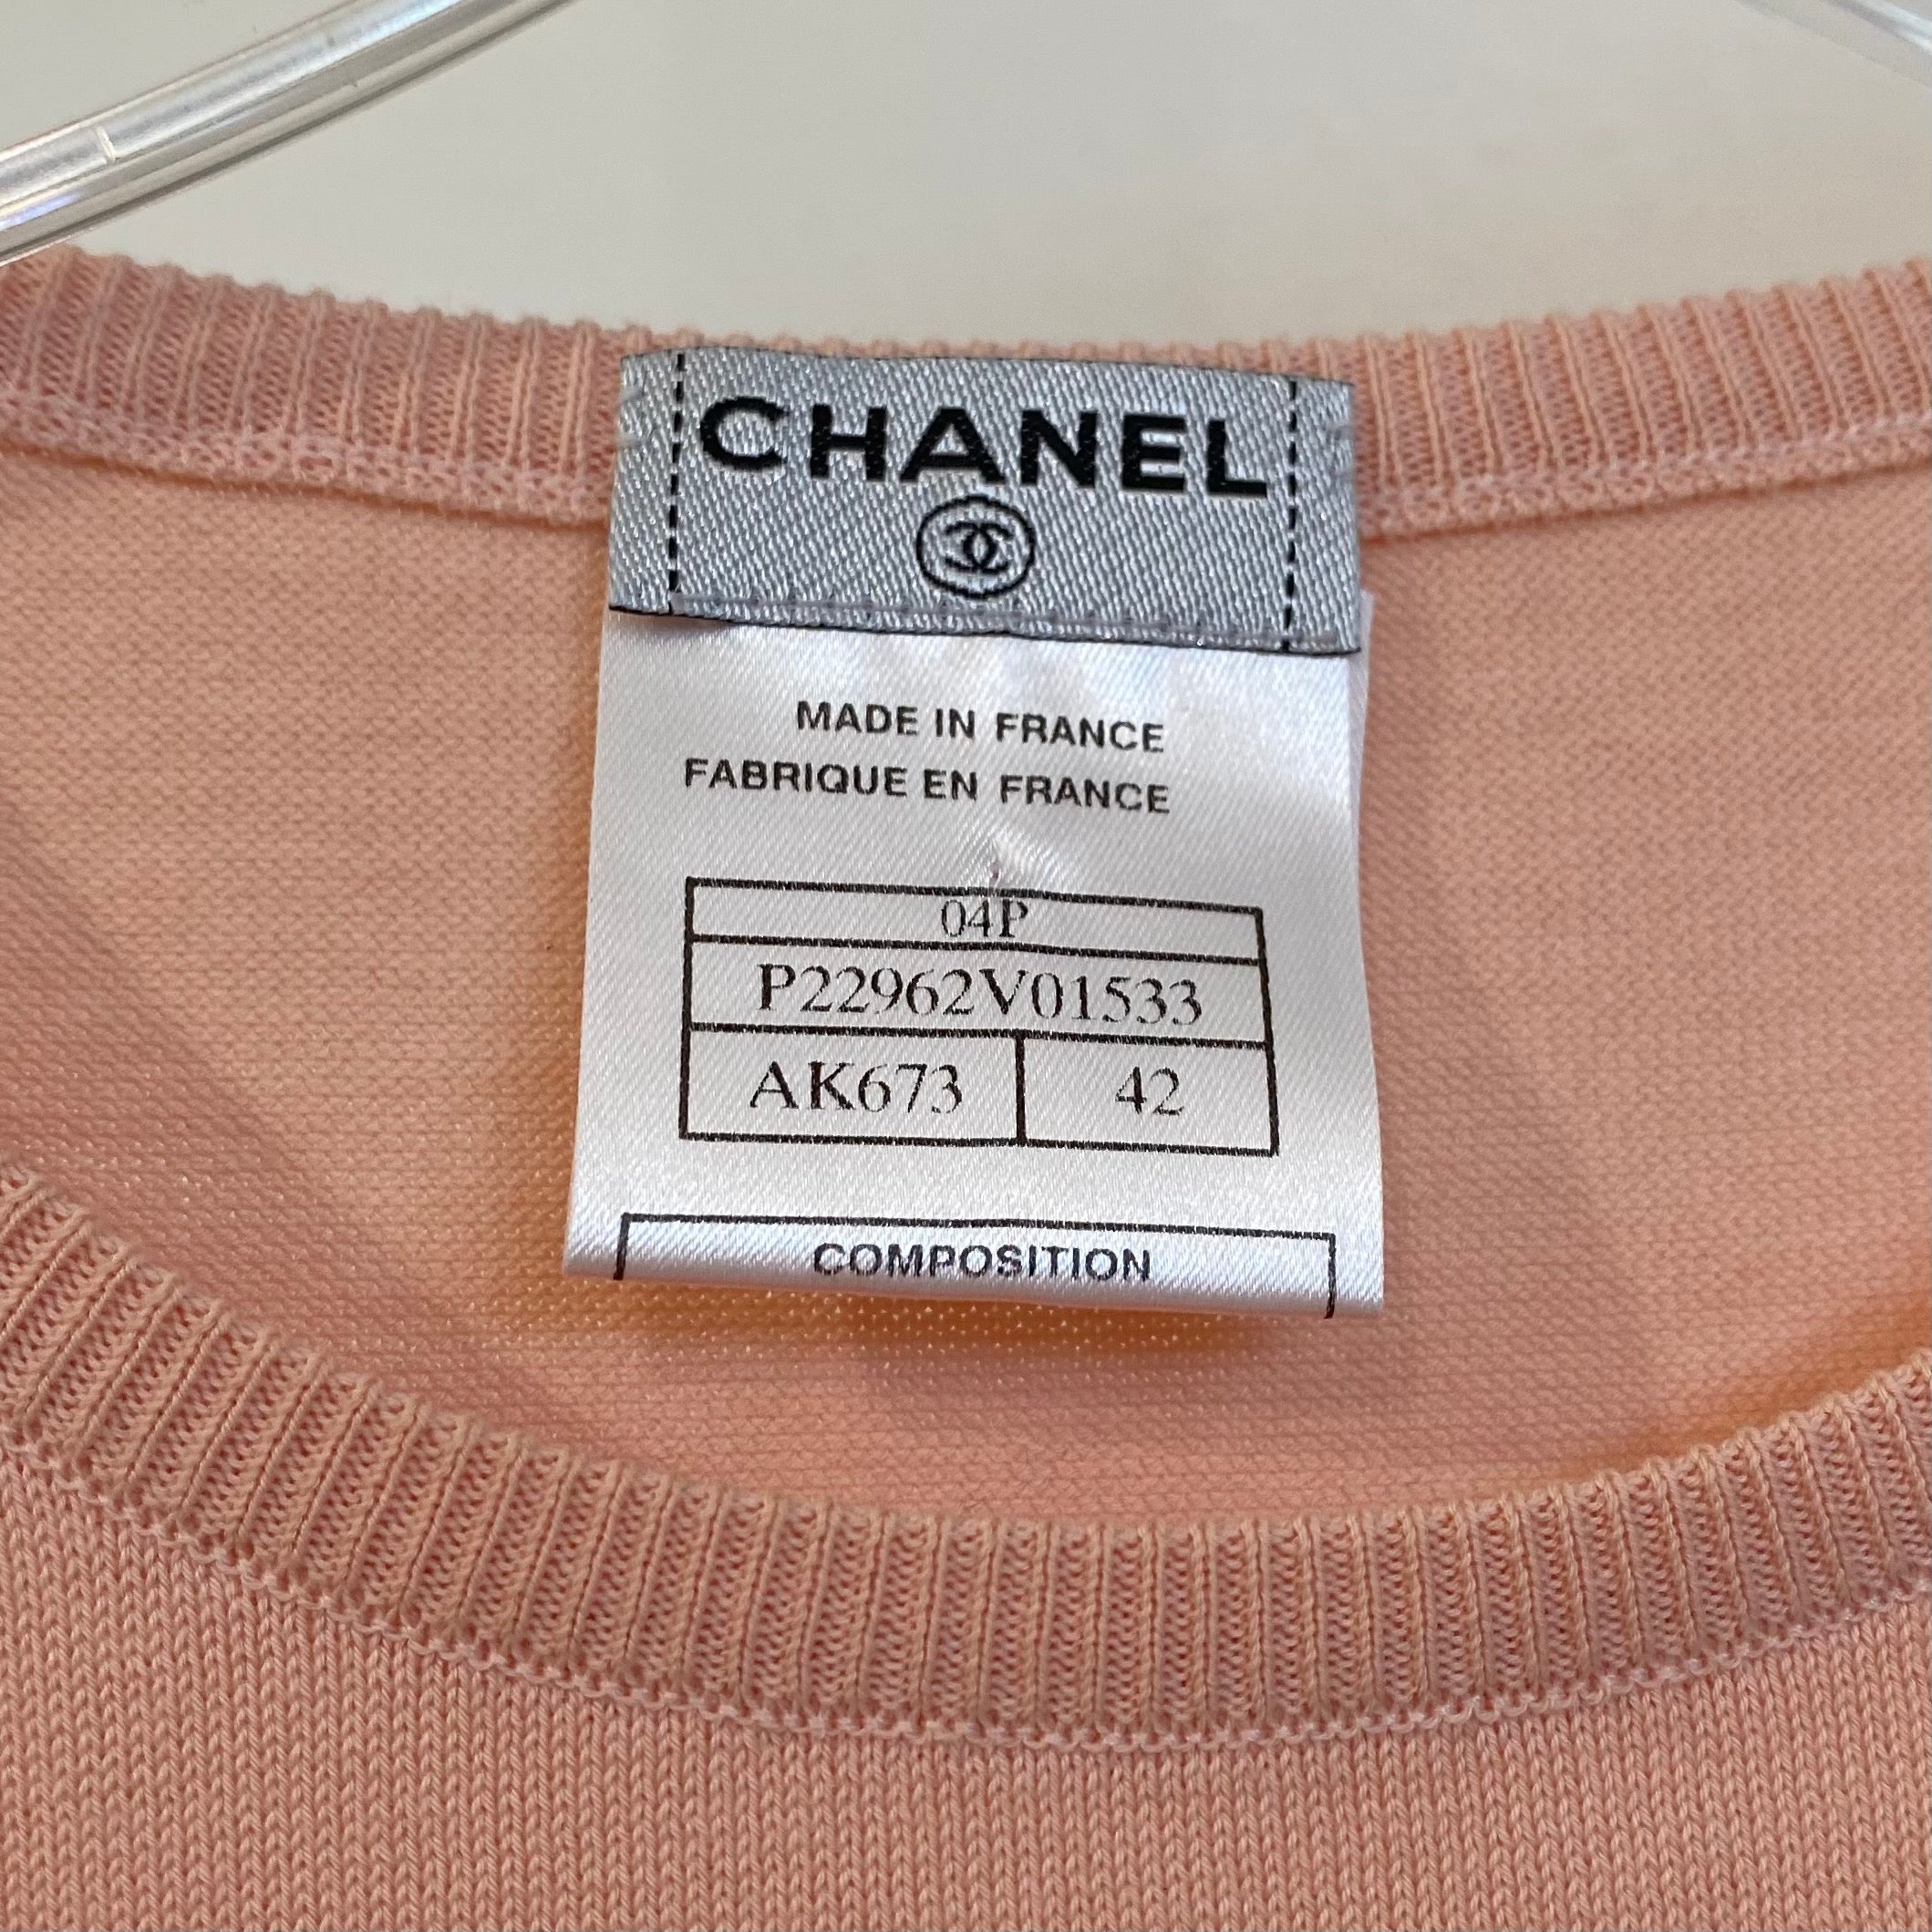 Chanel Peach Knit Top